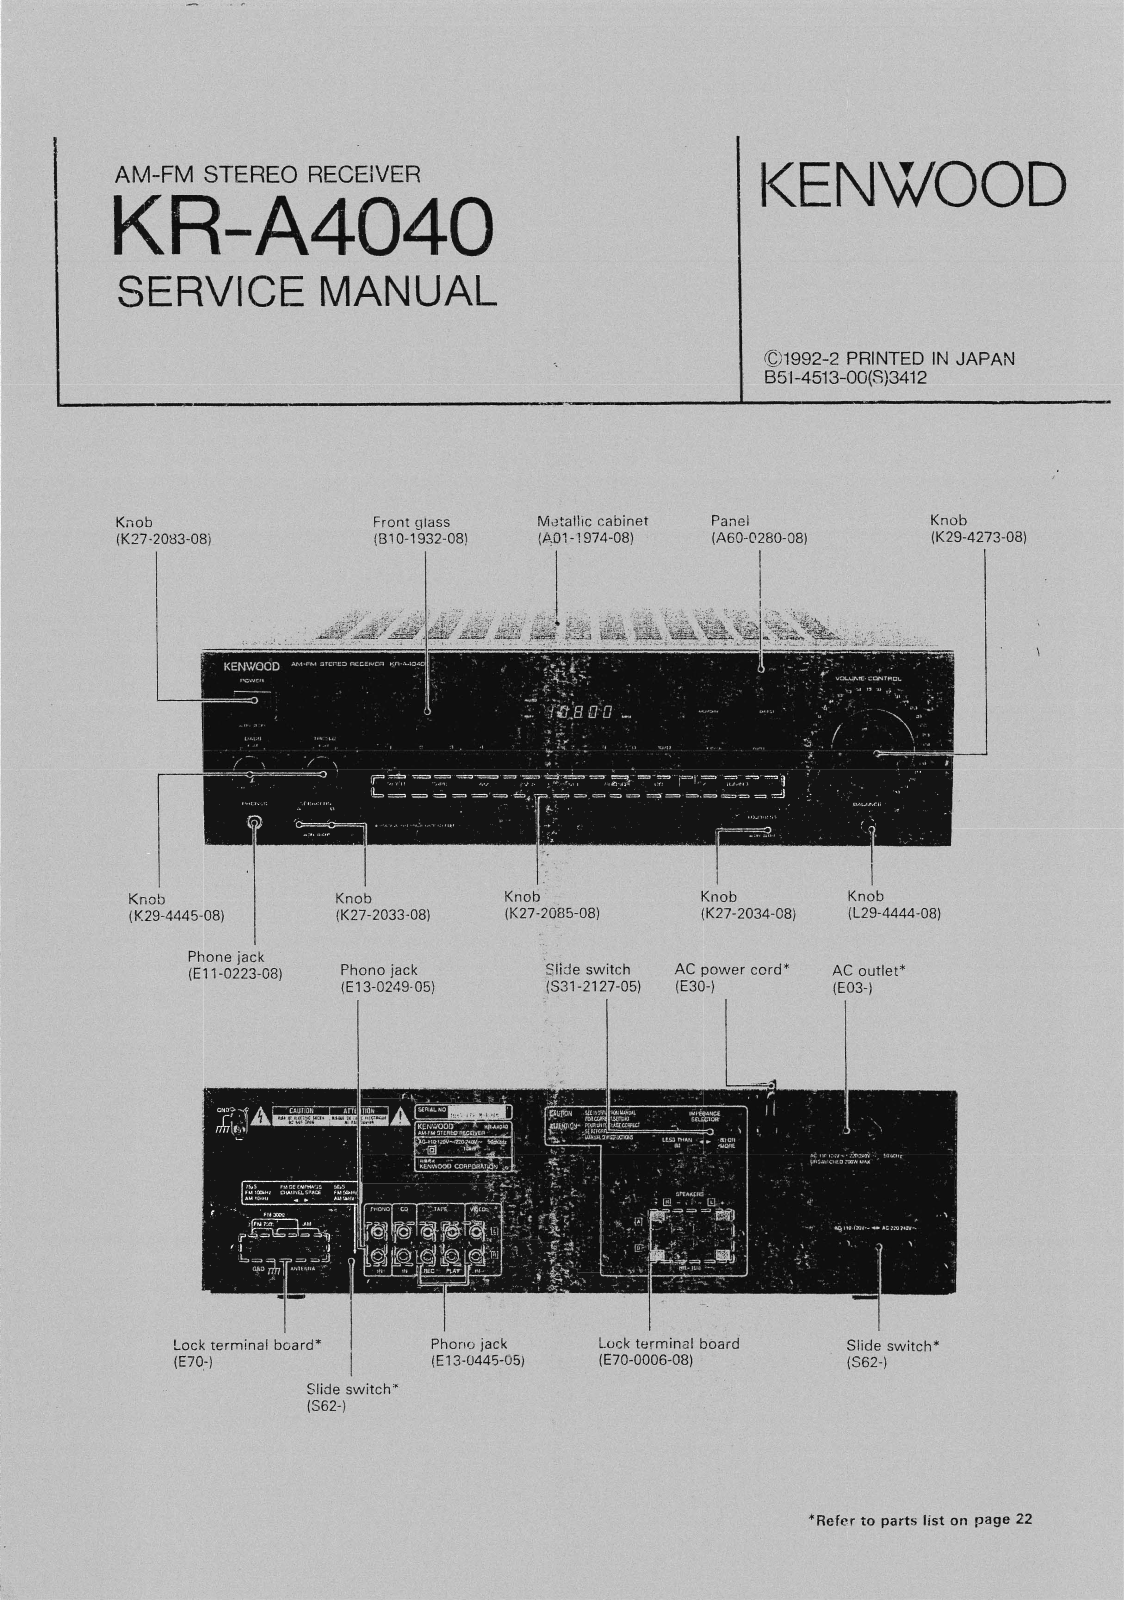 Kenwood KR-A4040 Service Manual